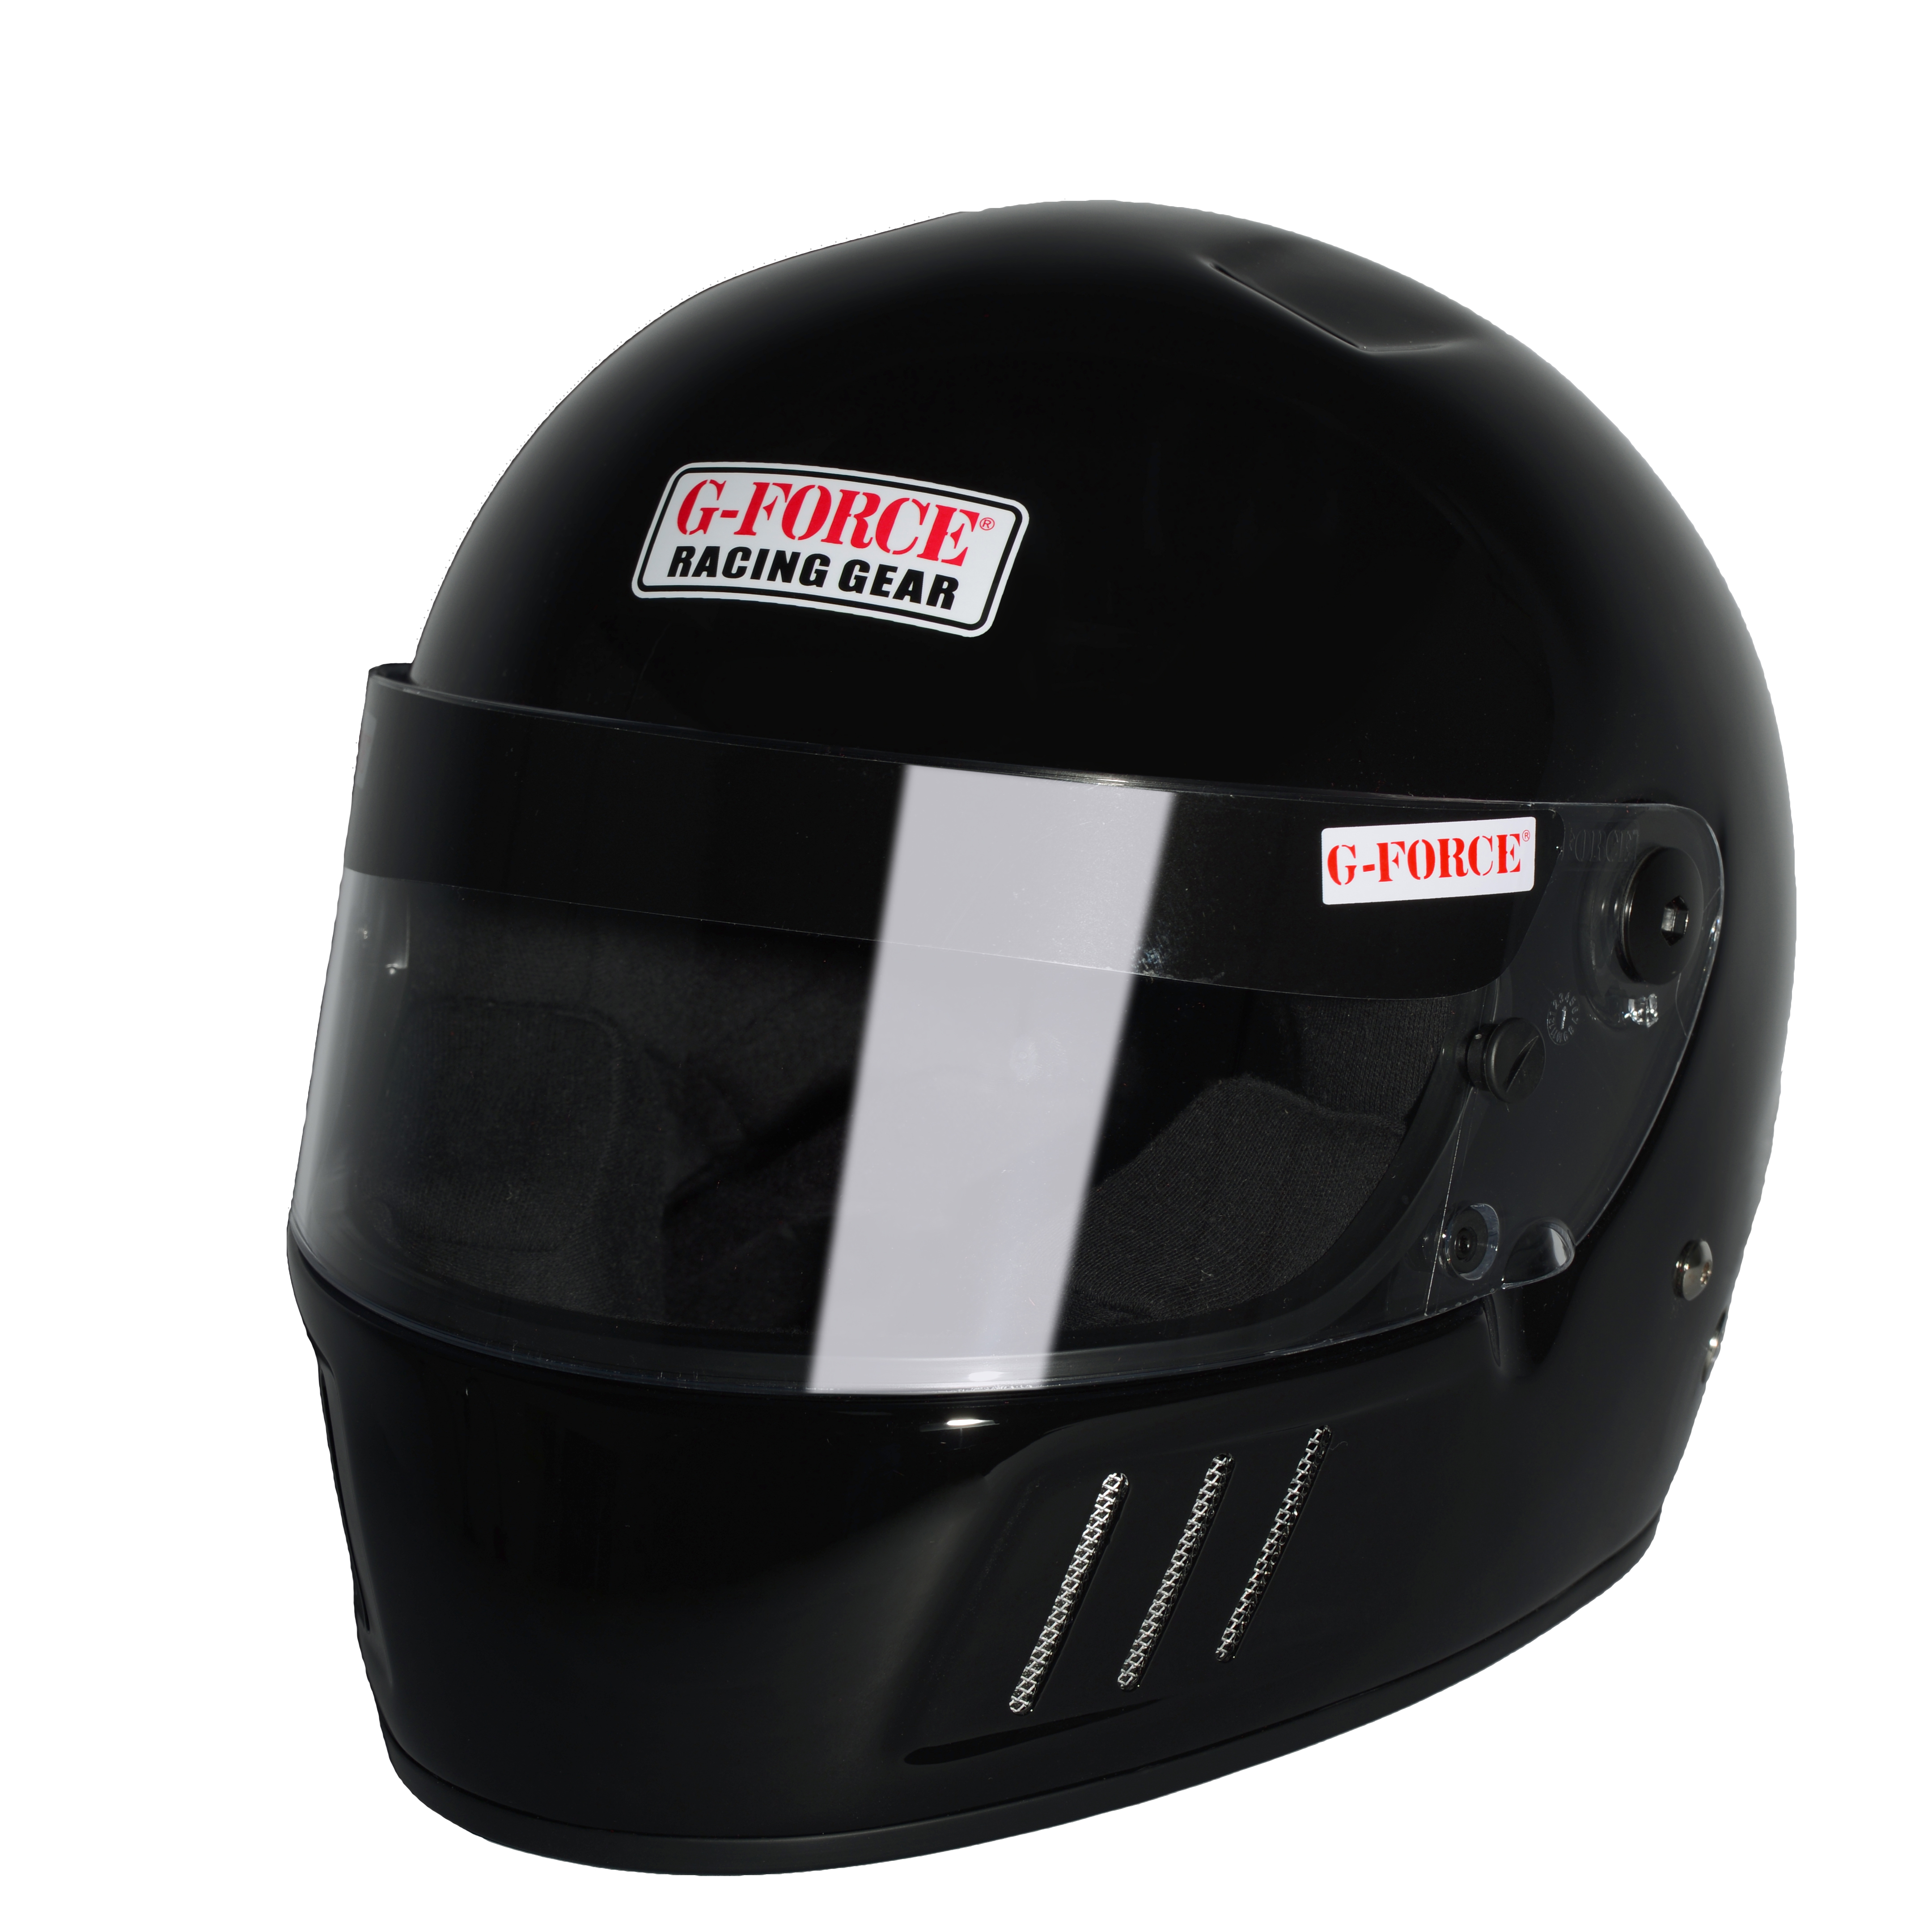 G-Force Racing Gear Helmet, PRO ELIMINATOR SA2010 FULL FACE SMALL BLACK